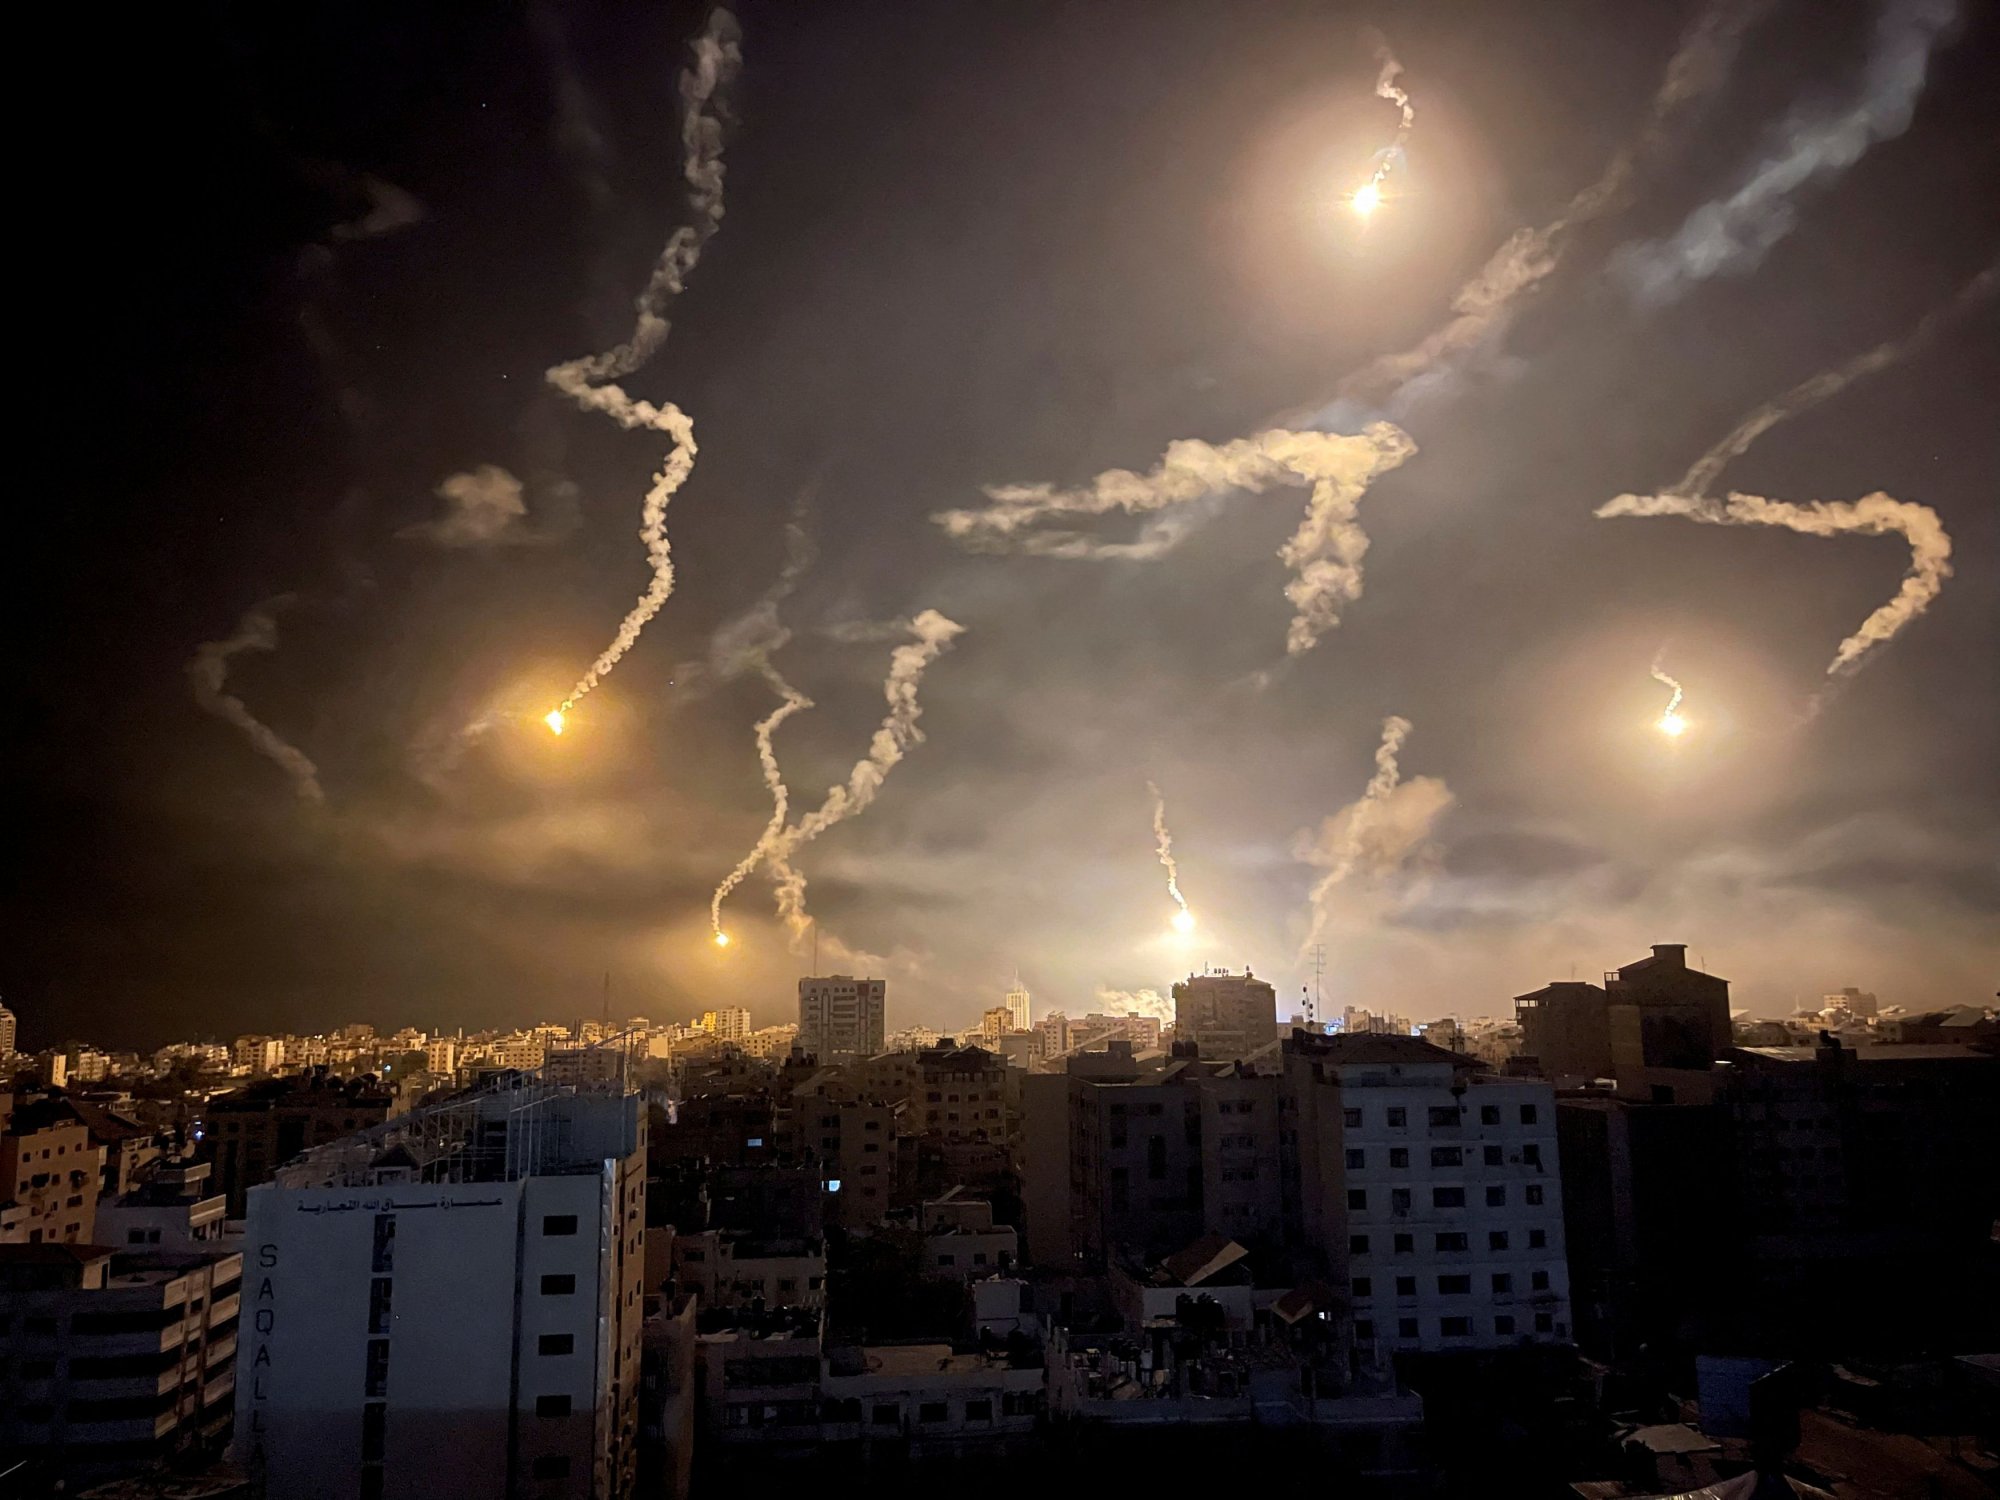 Live: Σφοδροί βομβαρδισμοί στην Γάζα - Φόβοι για δεκάδες θύματα - Κατάληψη στο Άγαλμα της Ελευθερίας